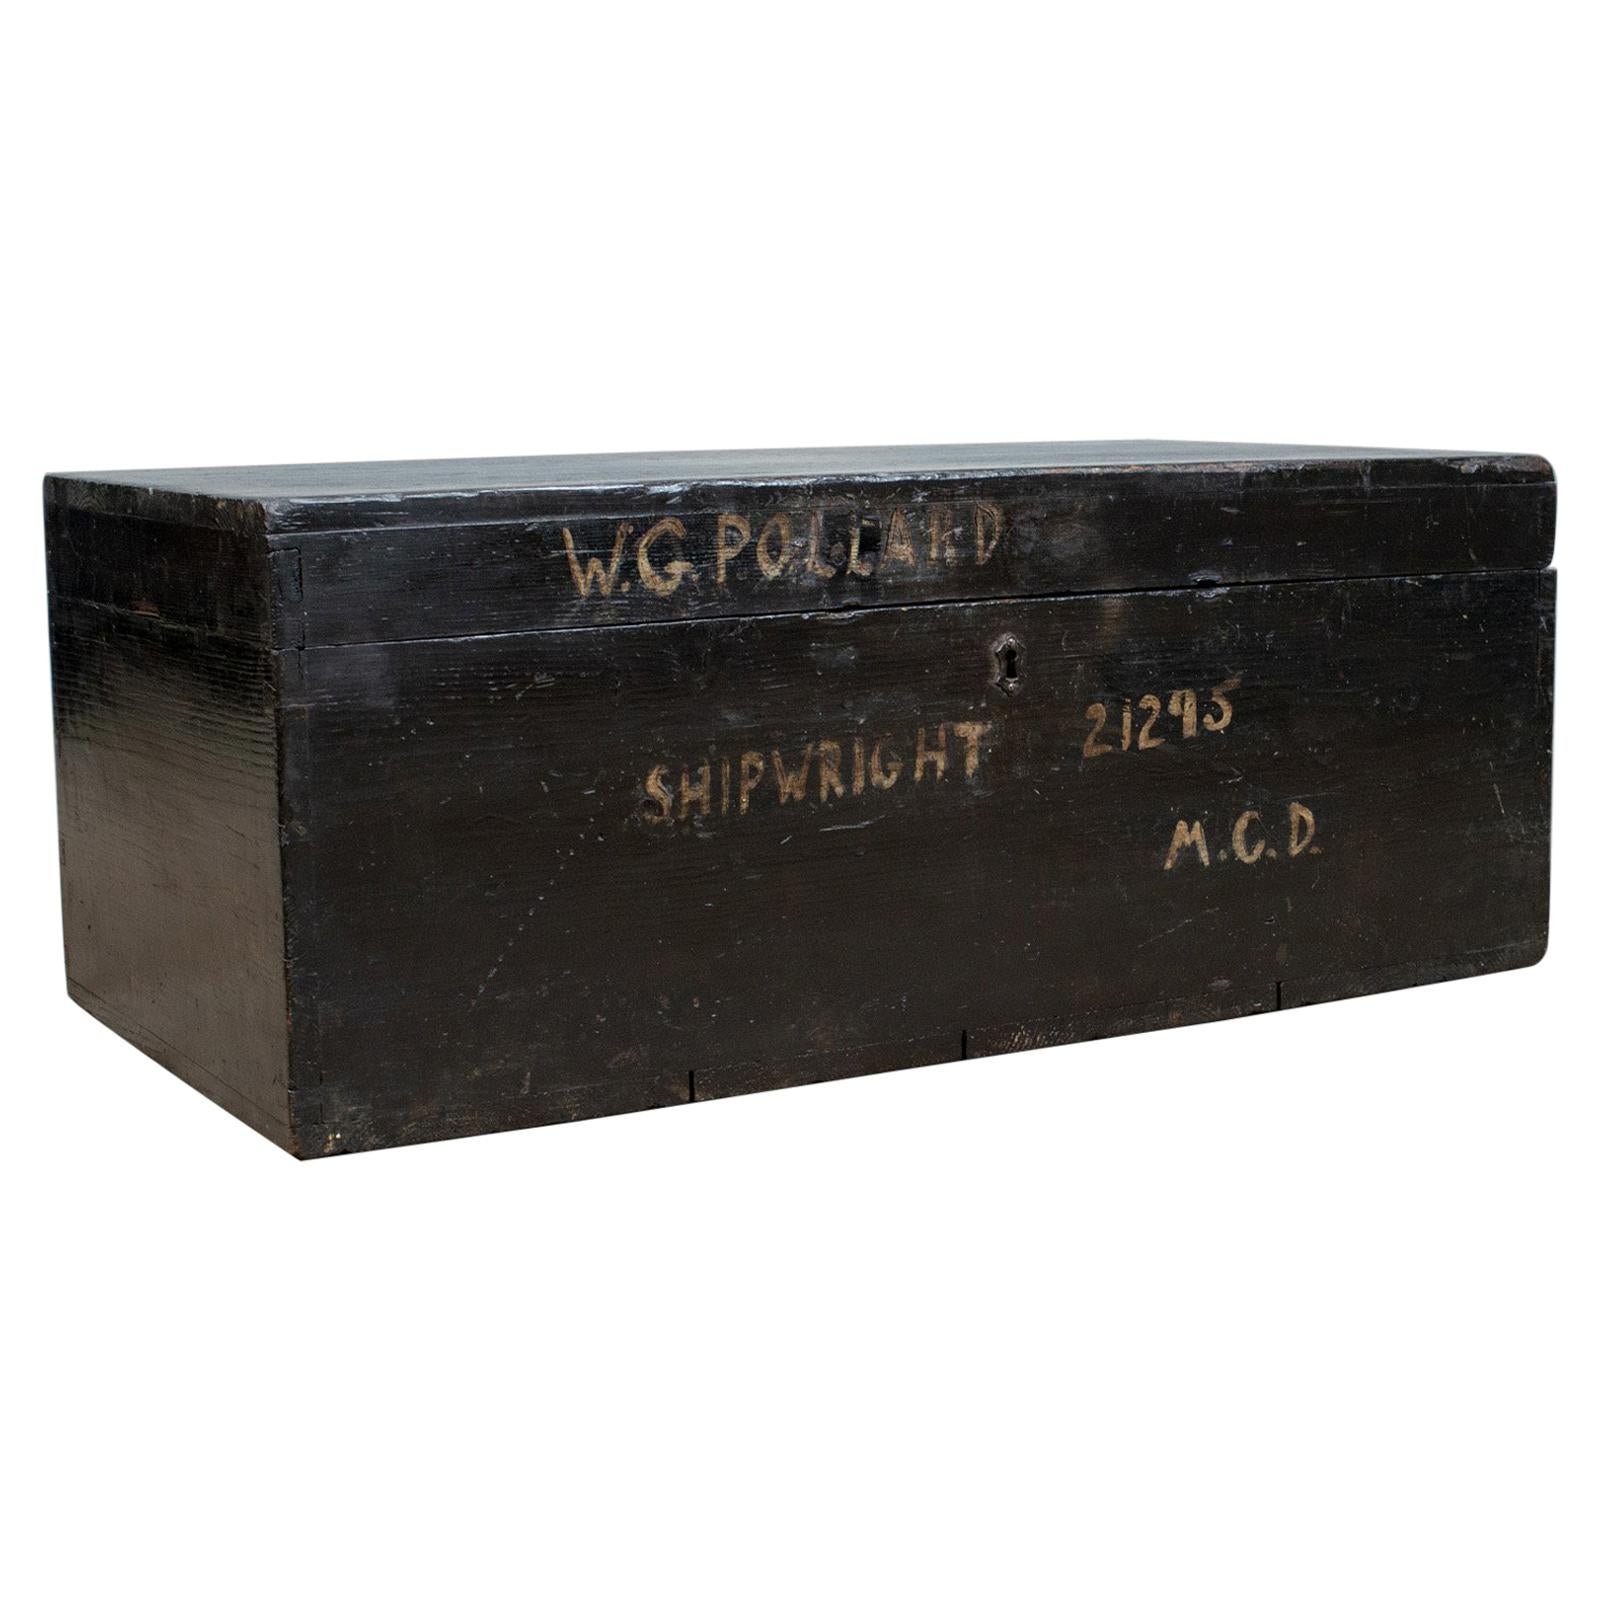 Antique Shipwright's Chest, Pine Tool Box Trunk, W.G. Pollard Early 20th Century